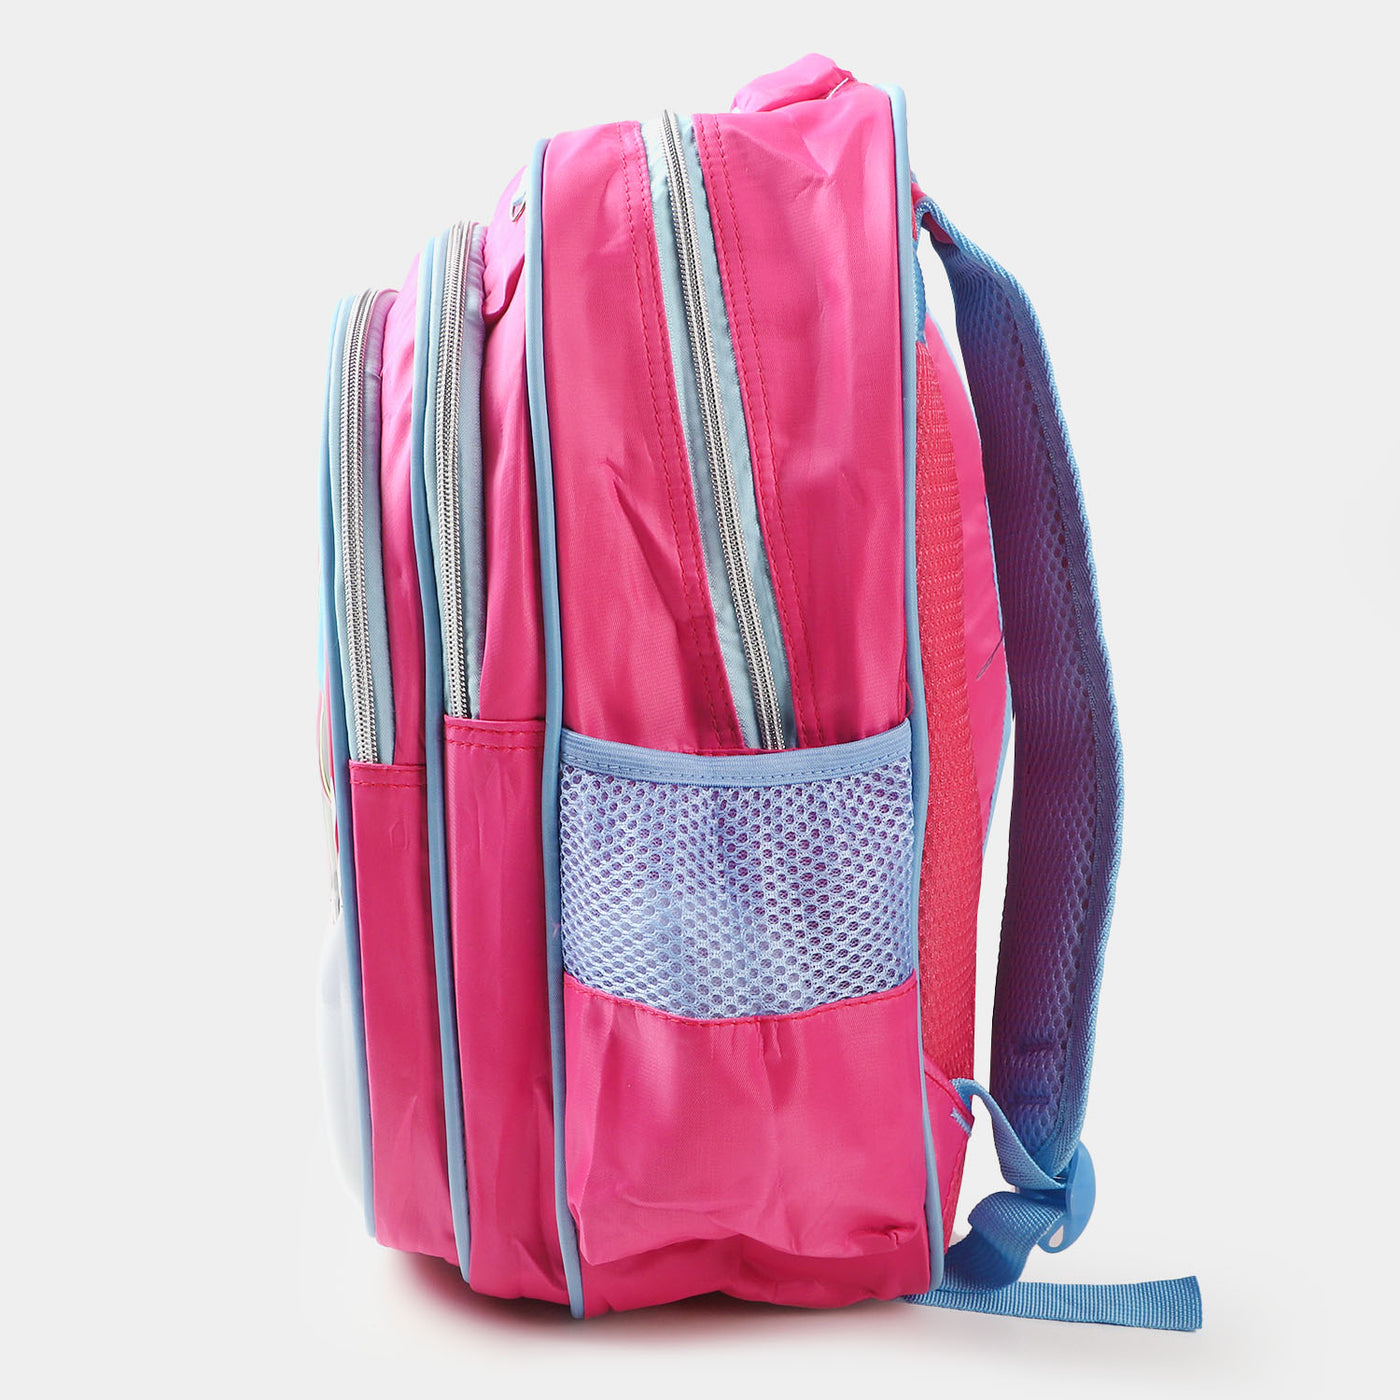 School Backpack For Kids